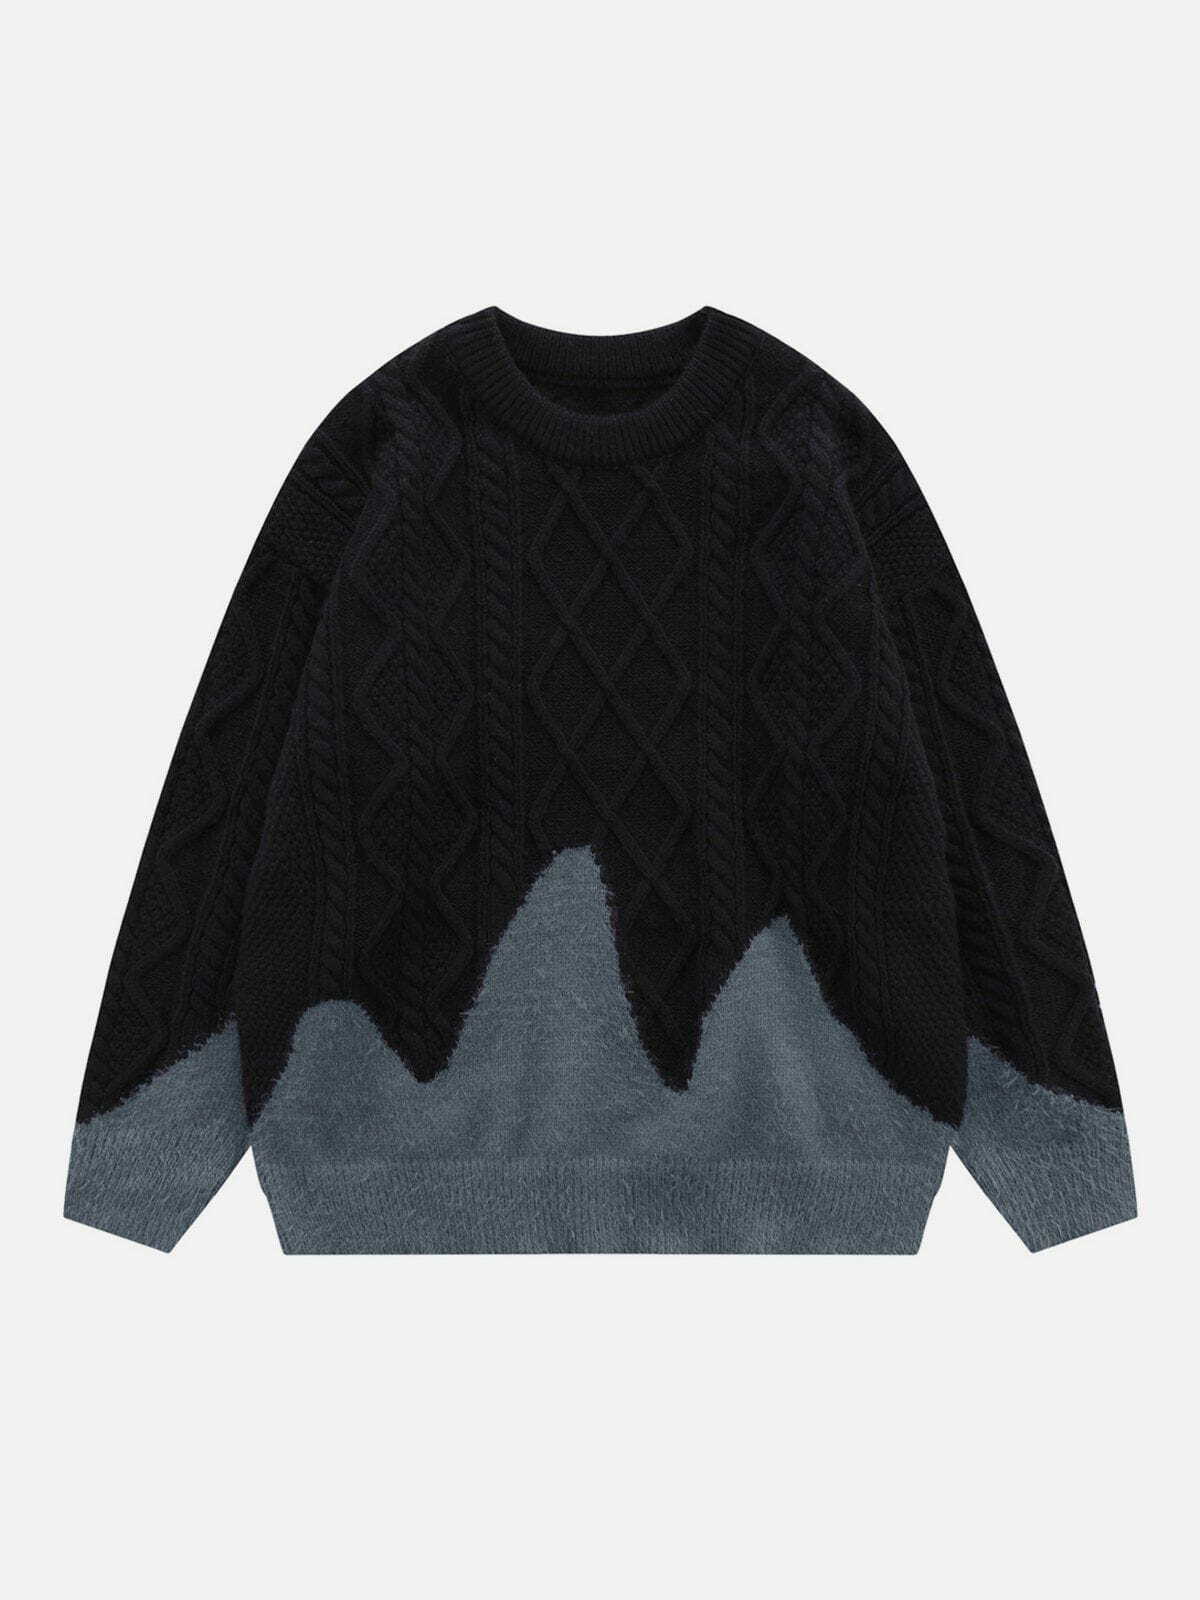 colorblock vintage sweater edgy y2k fashion icon 4948